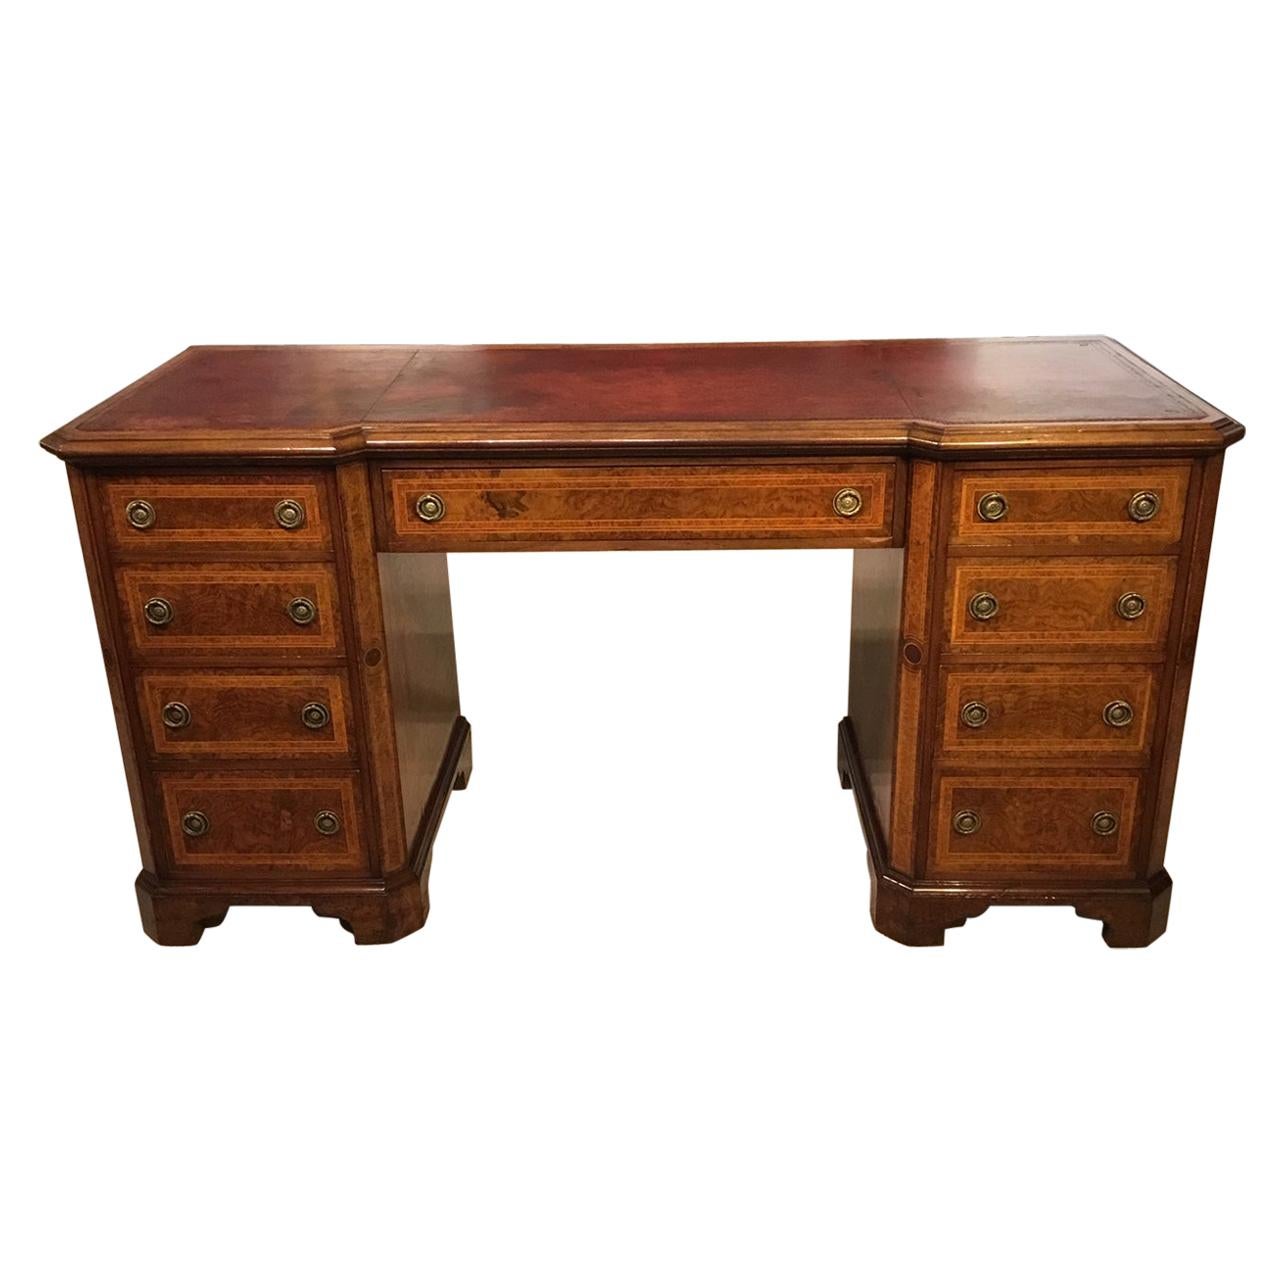 Burr Walnut, Kingwood and Amboyna Victorian Period Antique Writing Desk